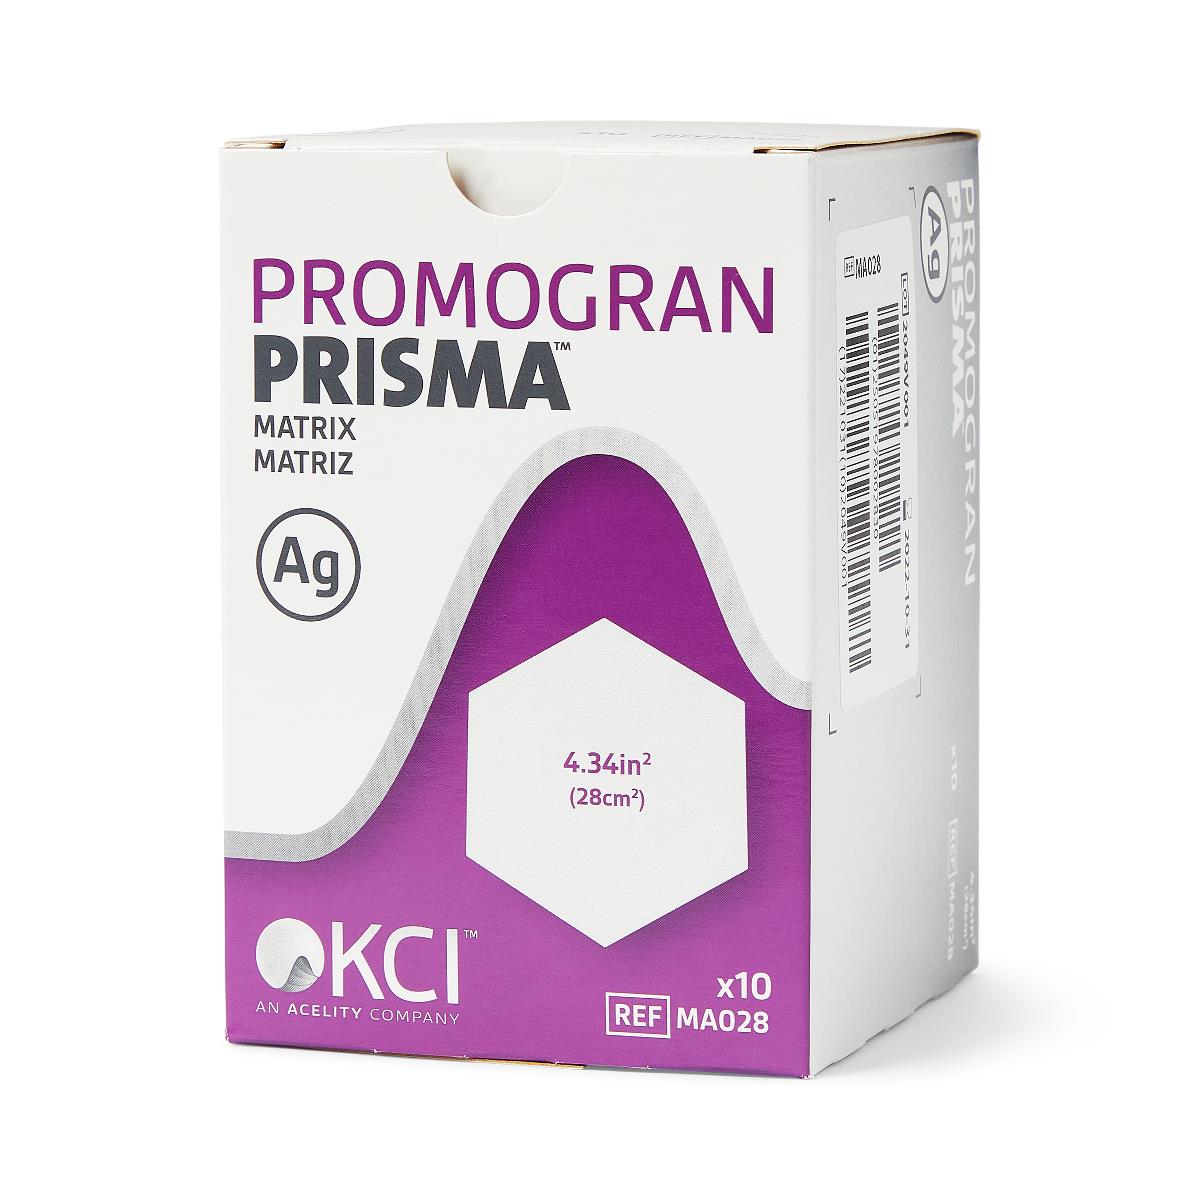 PROMOGRAN PRISMA Matrix Wound Dressing - Medical Monks